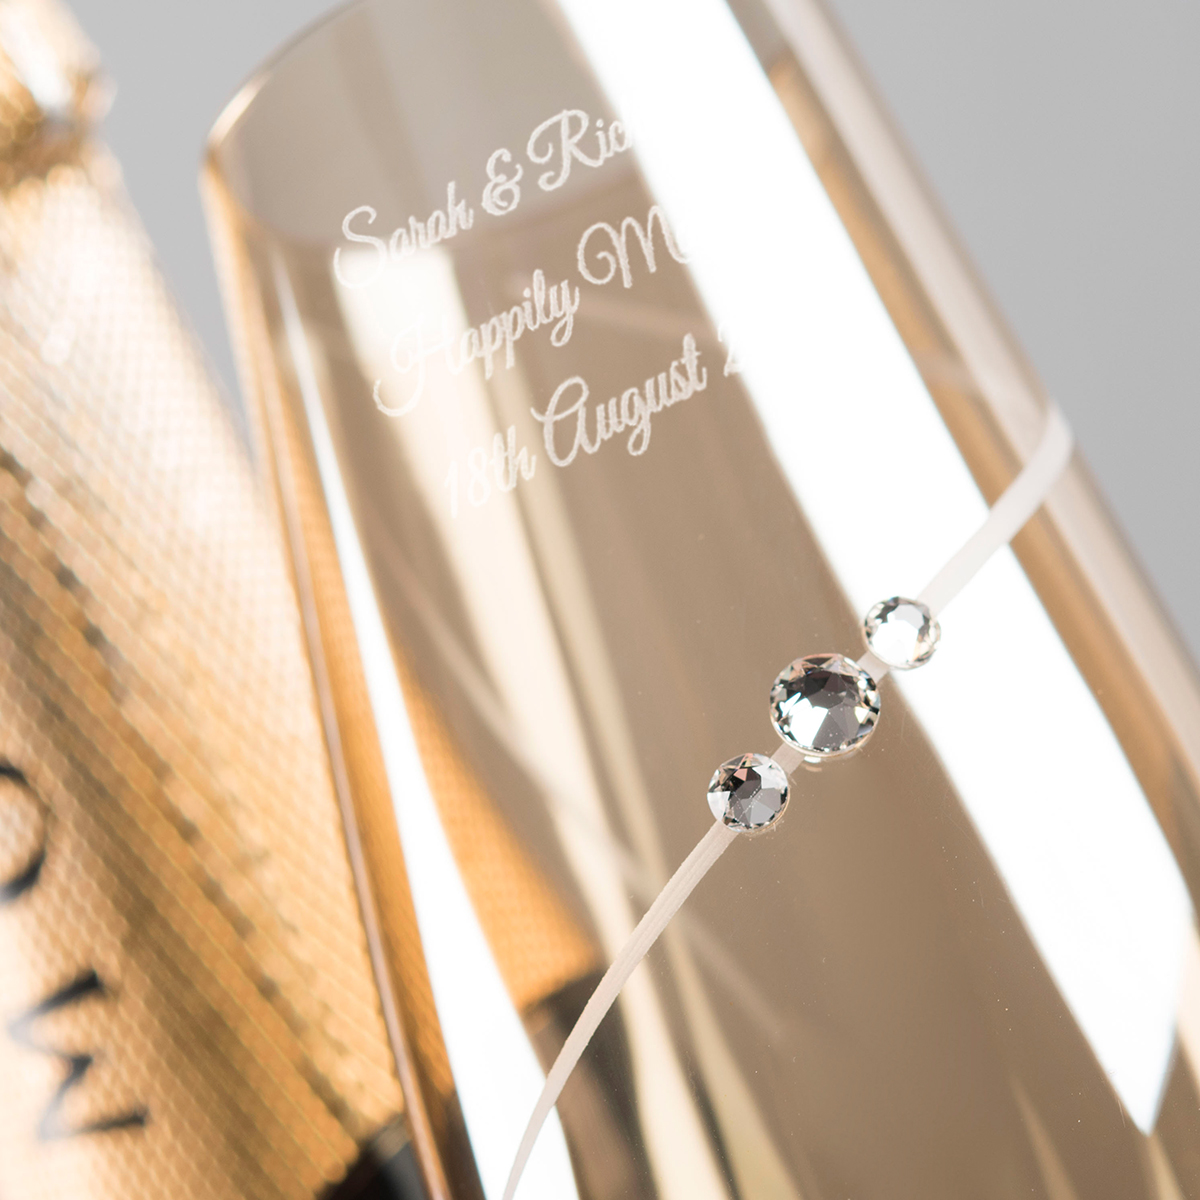 Engraved Amber Swarovski Elements Diamante Champagne Flute Set